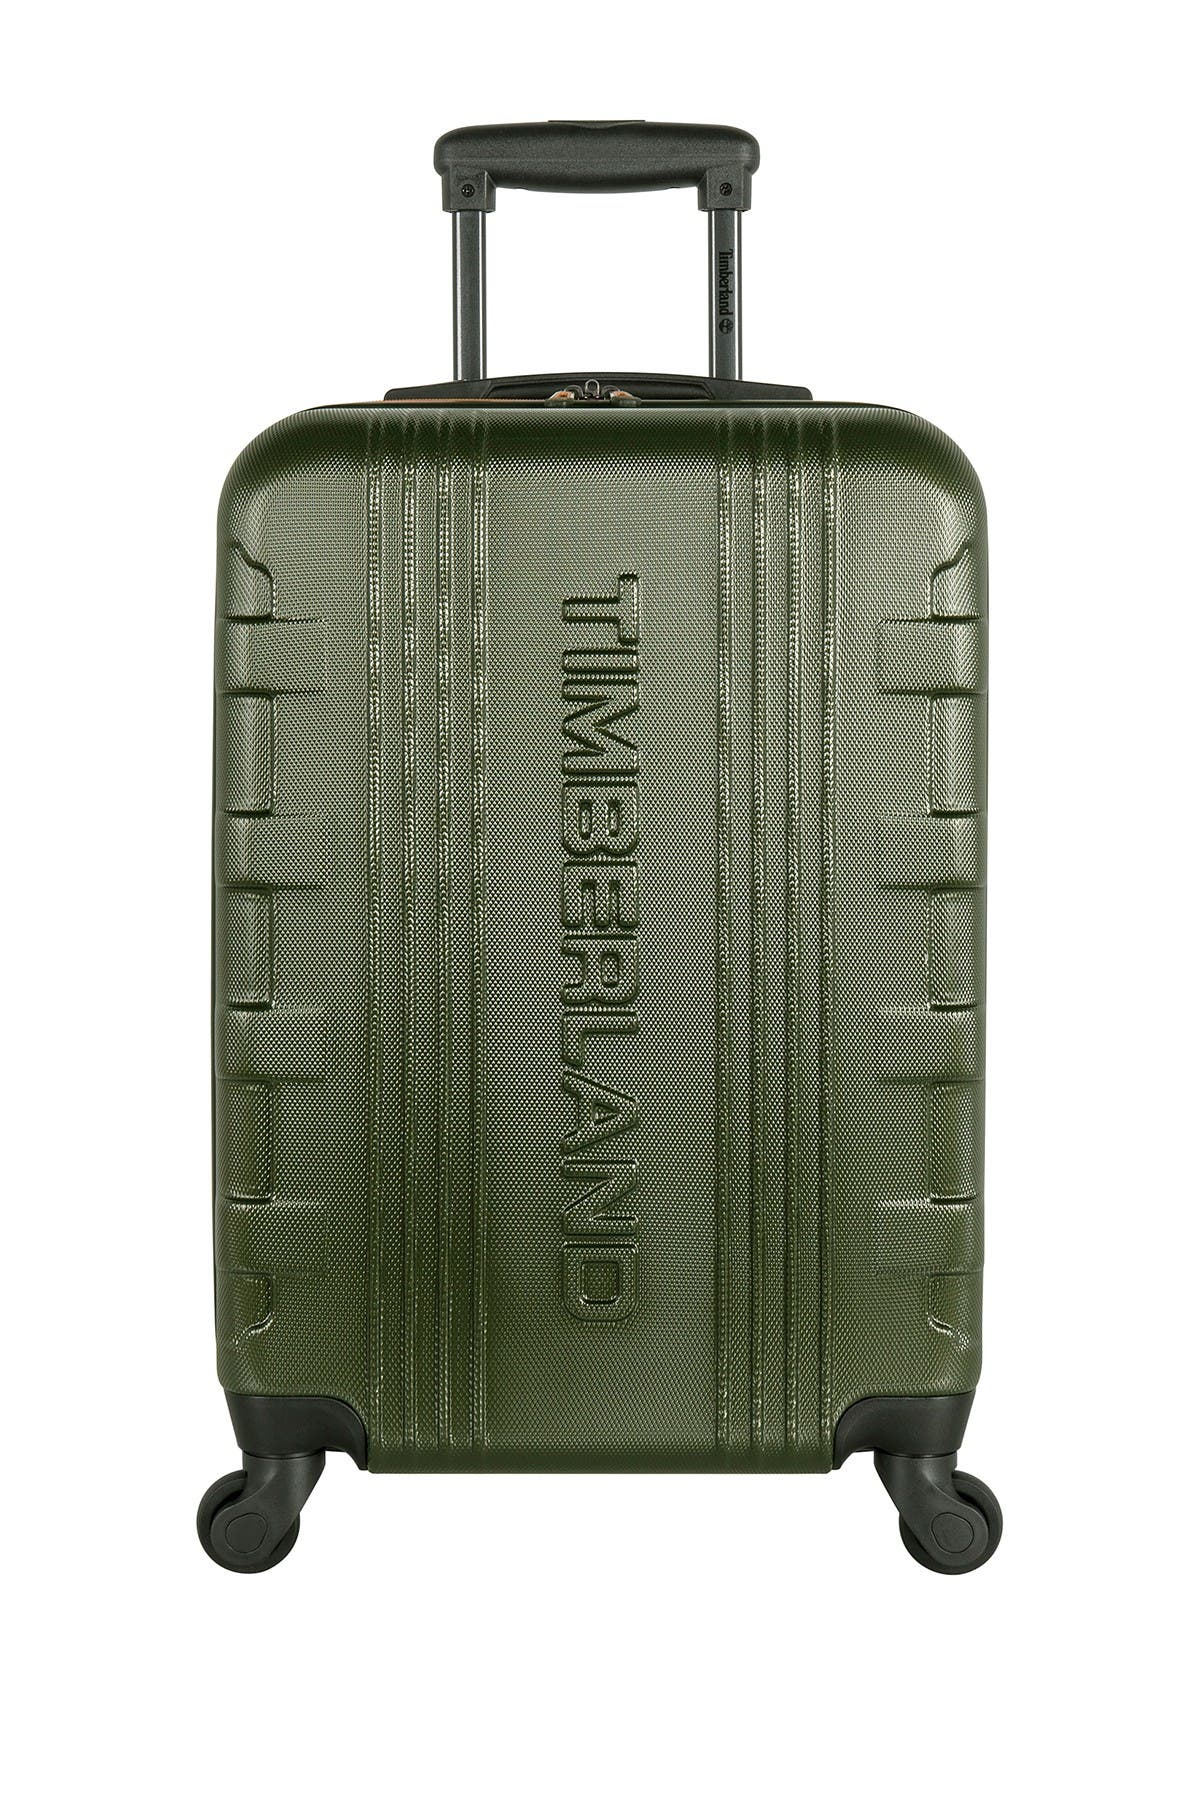 timberland luggage